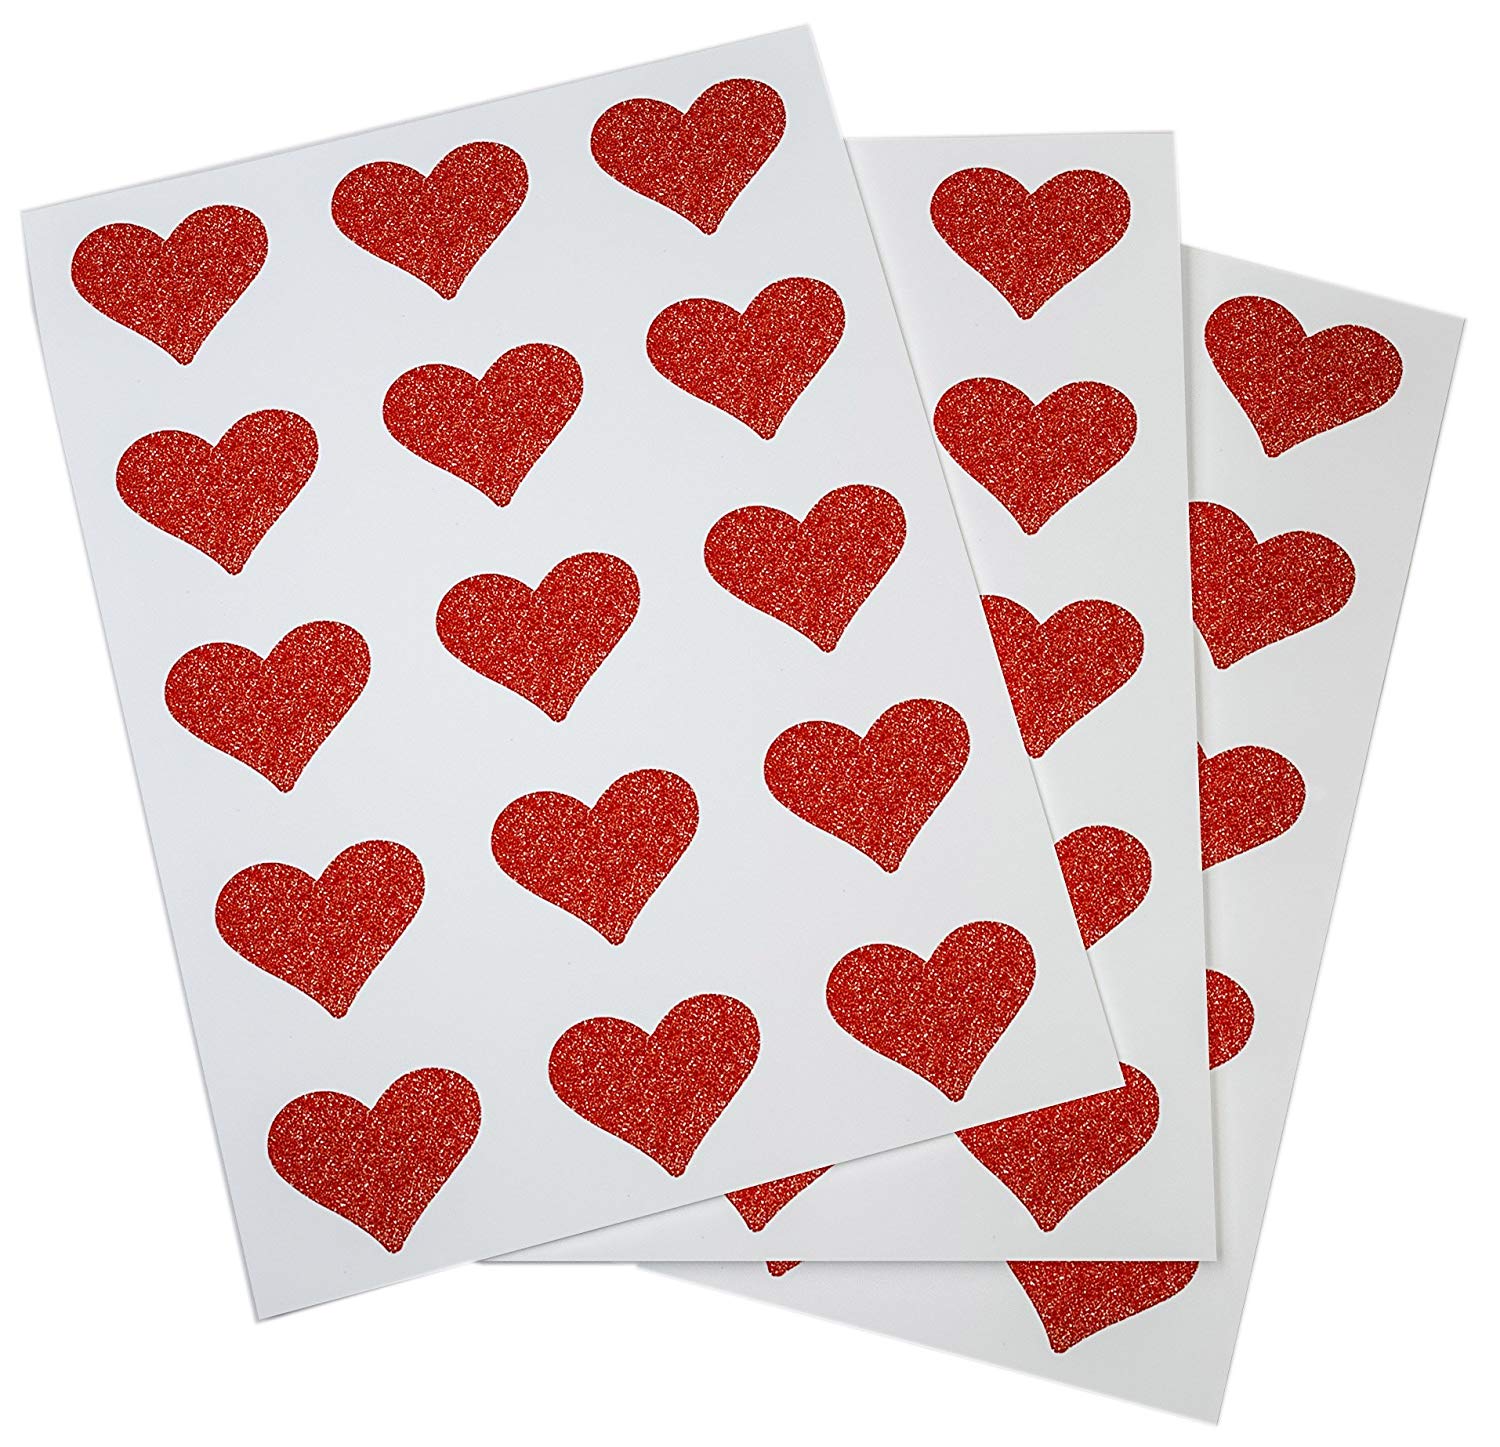 Heart Glitter Stickers 1.5 x 1.75 inch 144 / Silver Glitter